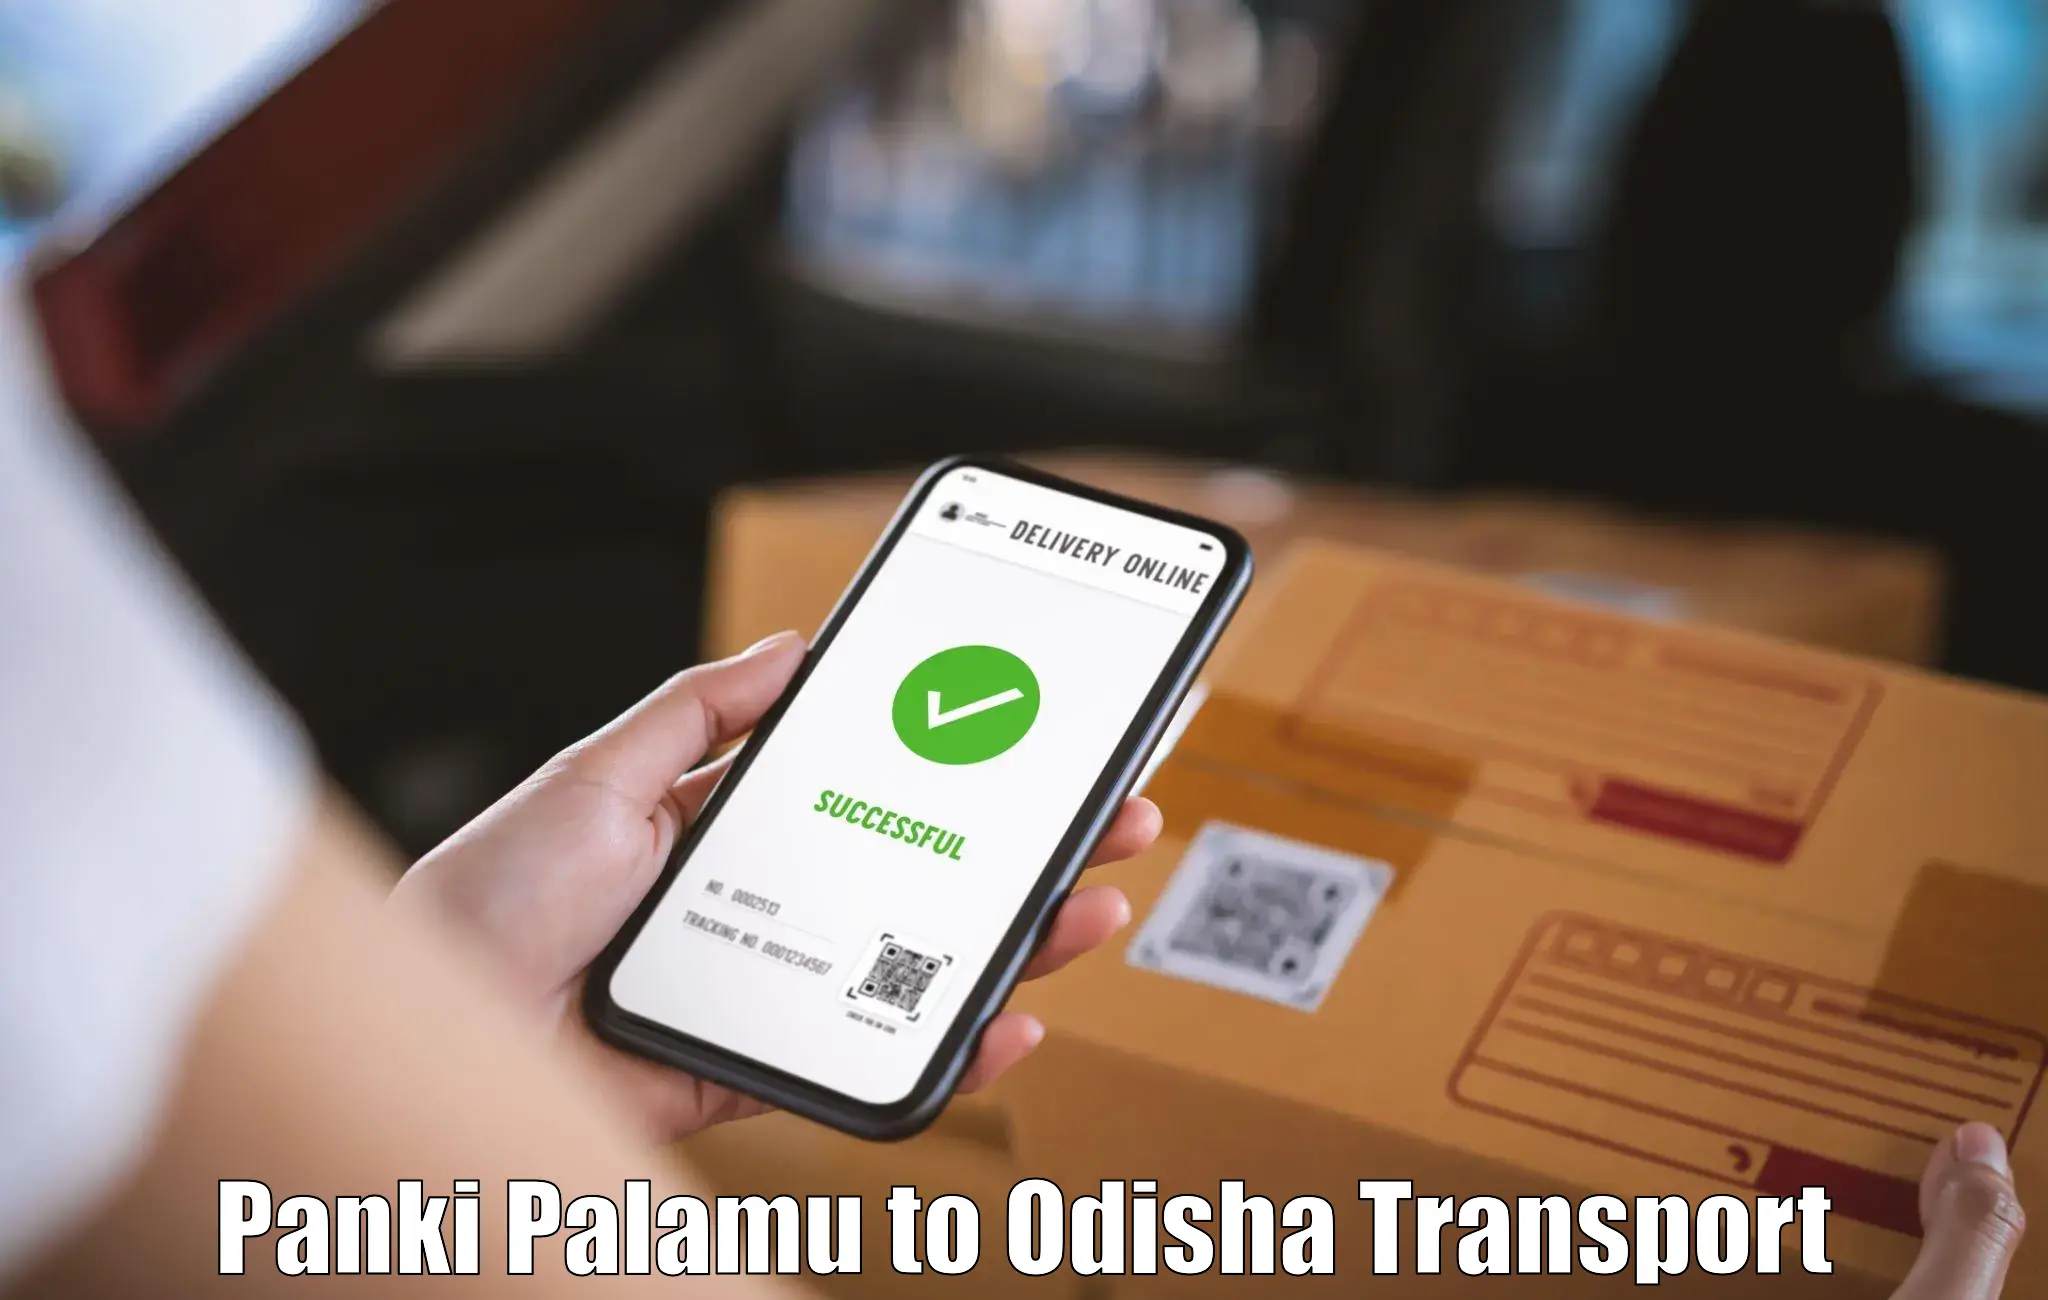 Transport shared services Panki Palamu to Binka